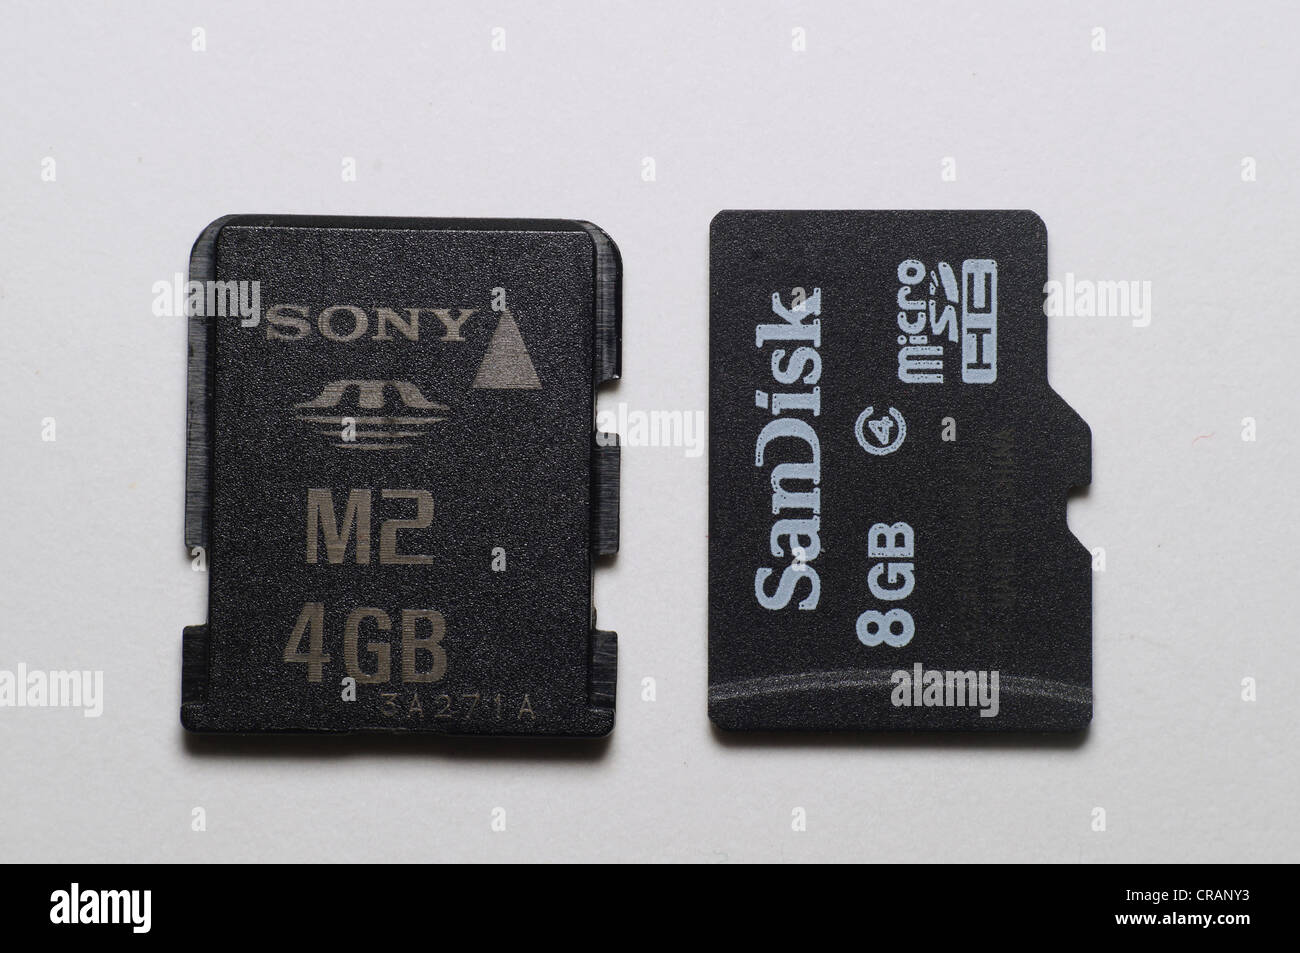 Micro SD and M2 (High Photo - Alamy